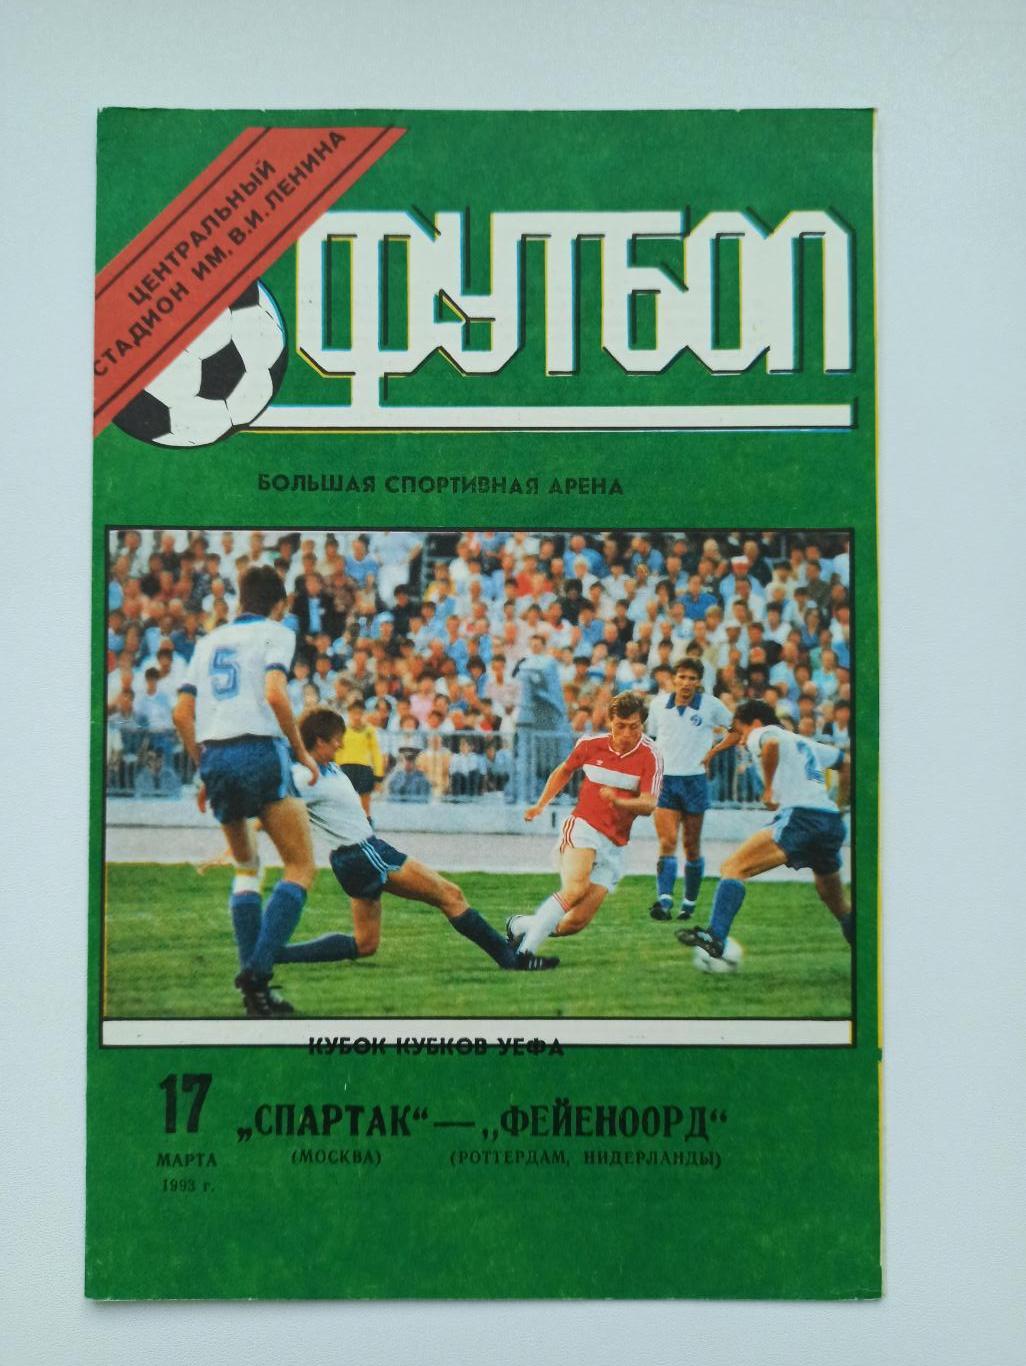 Распродажа, Еврокубки, Спартак (Москва) - Фейеноорд, 1993г., стадион